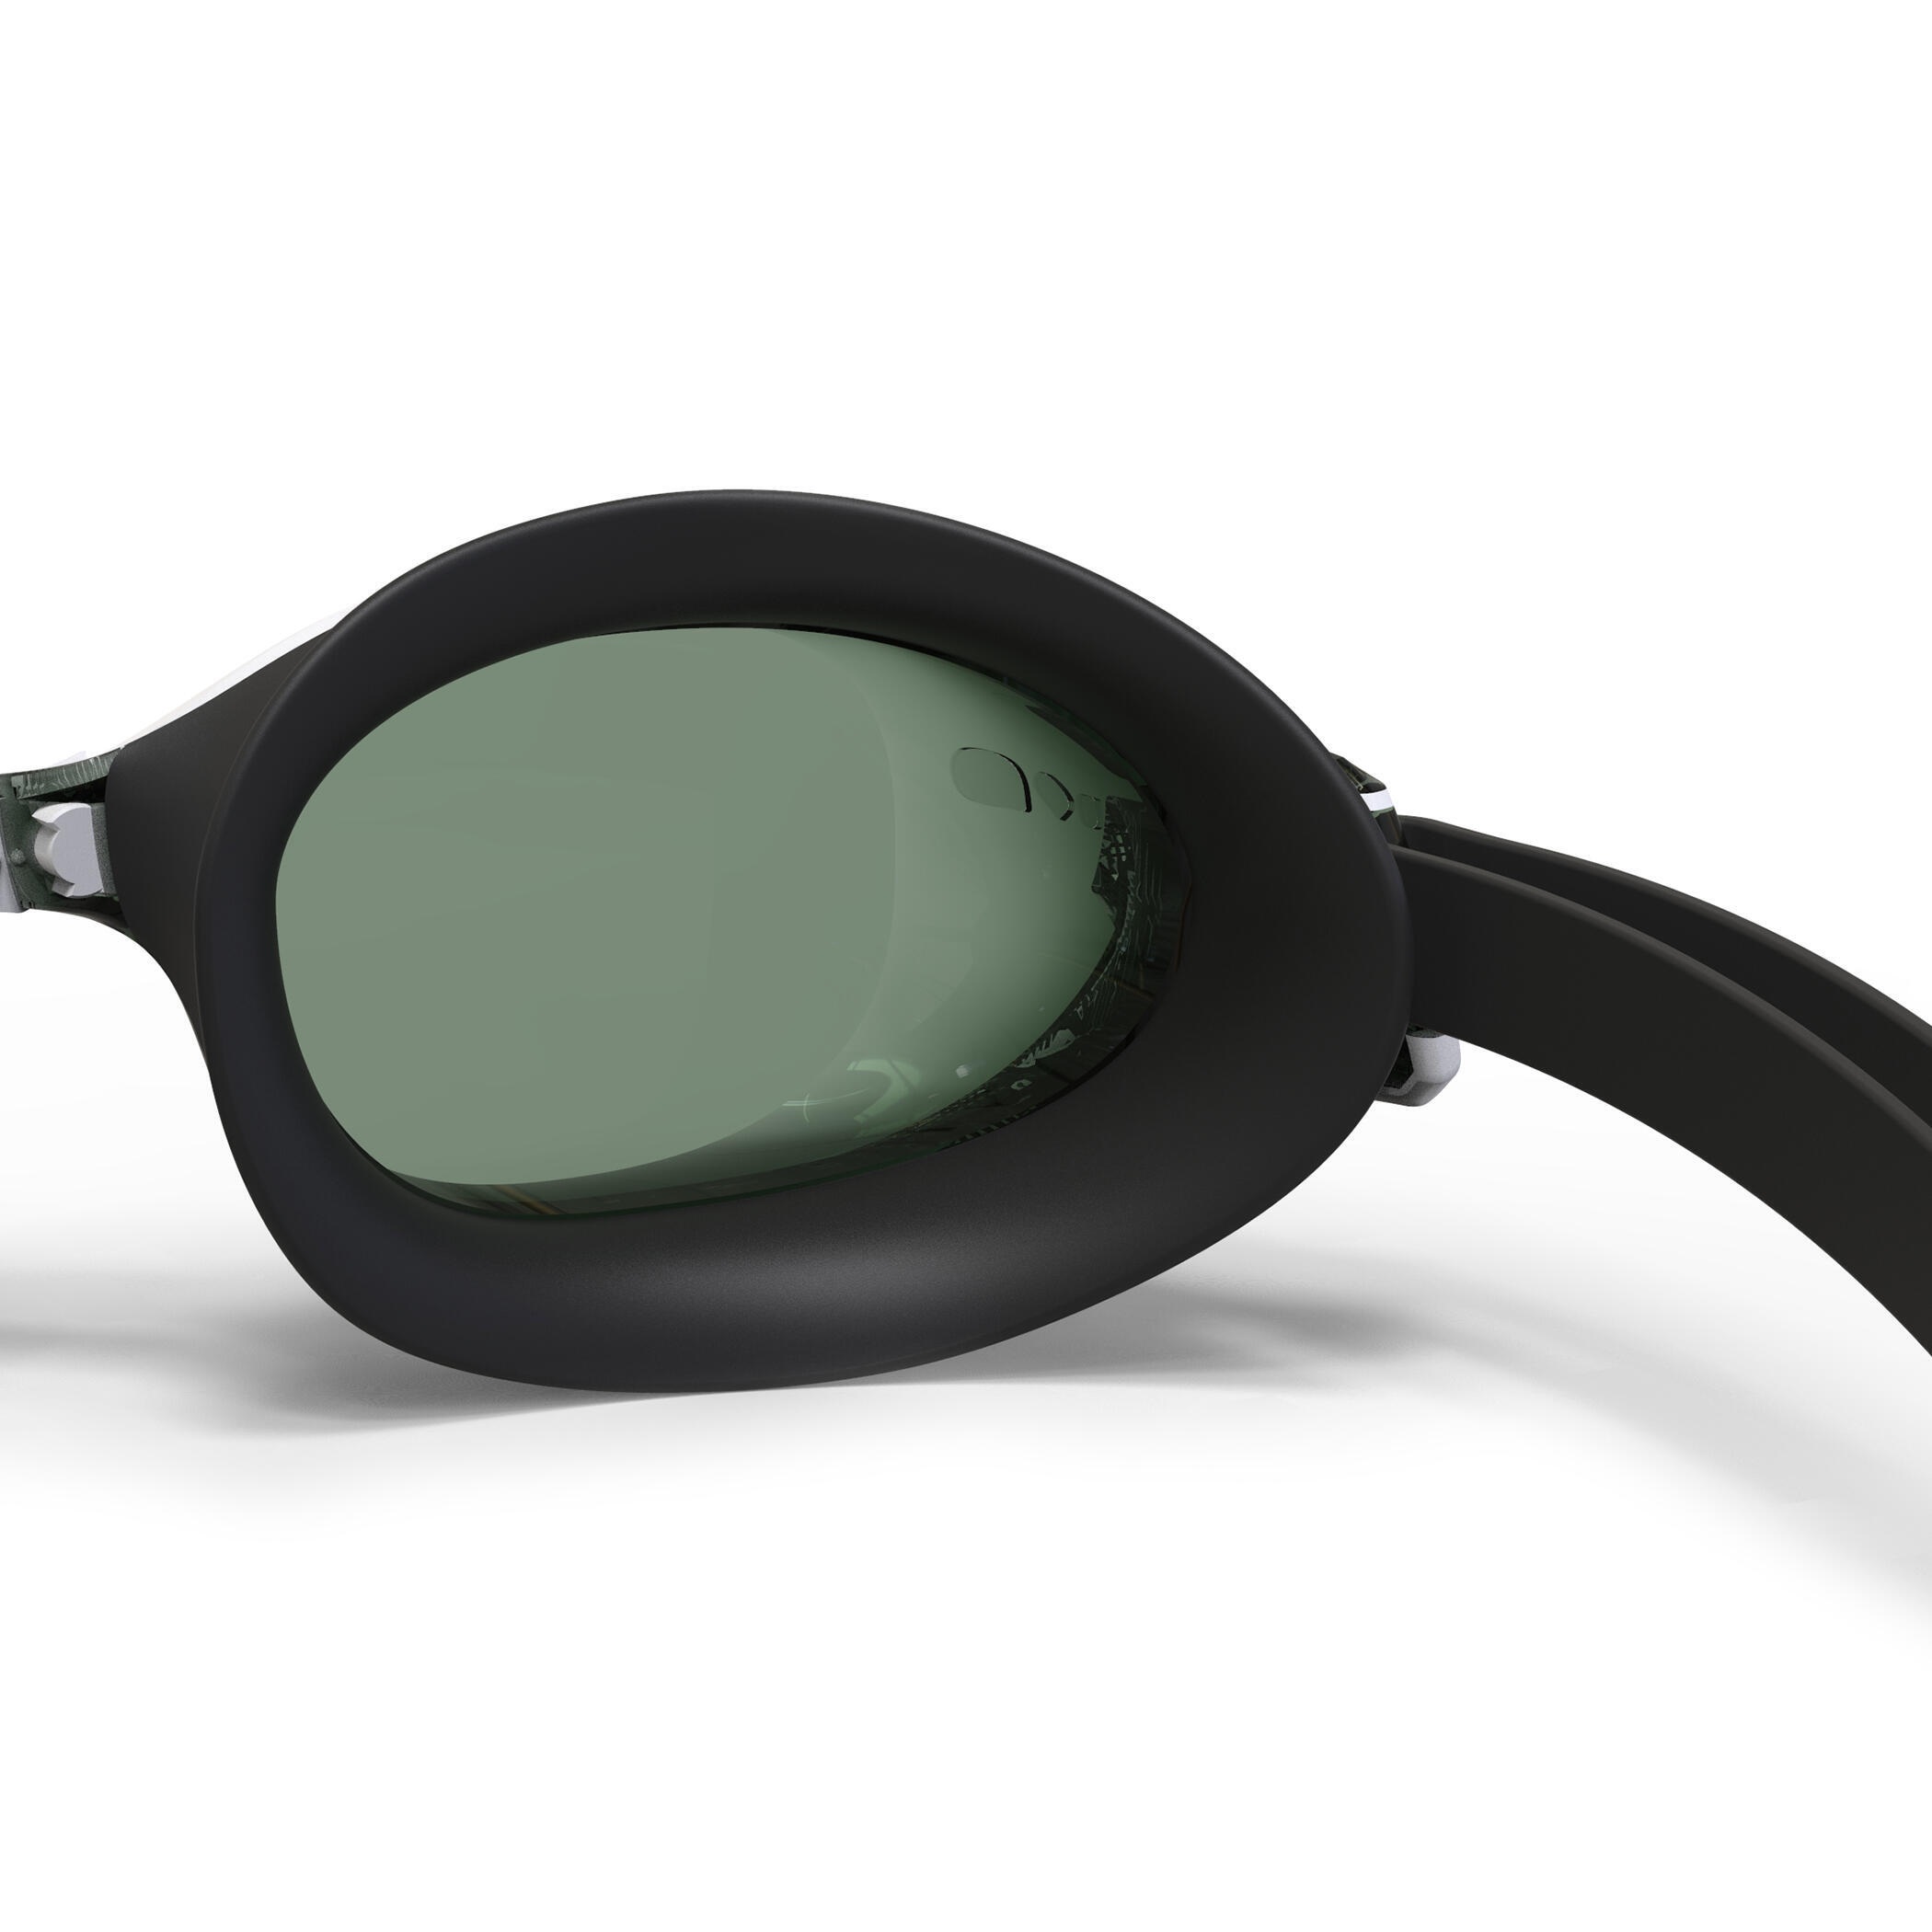 BFIT corrective swimming goggles - Smoked lenses - Single size - Black 5/6